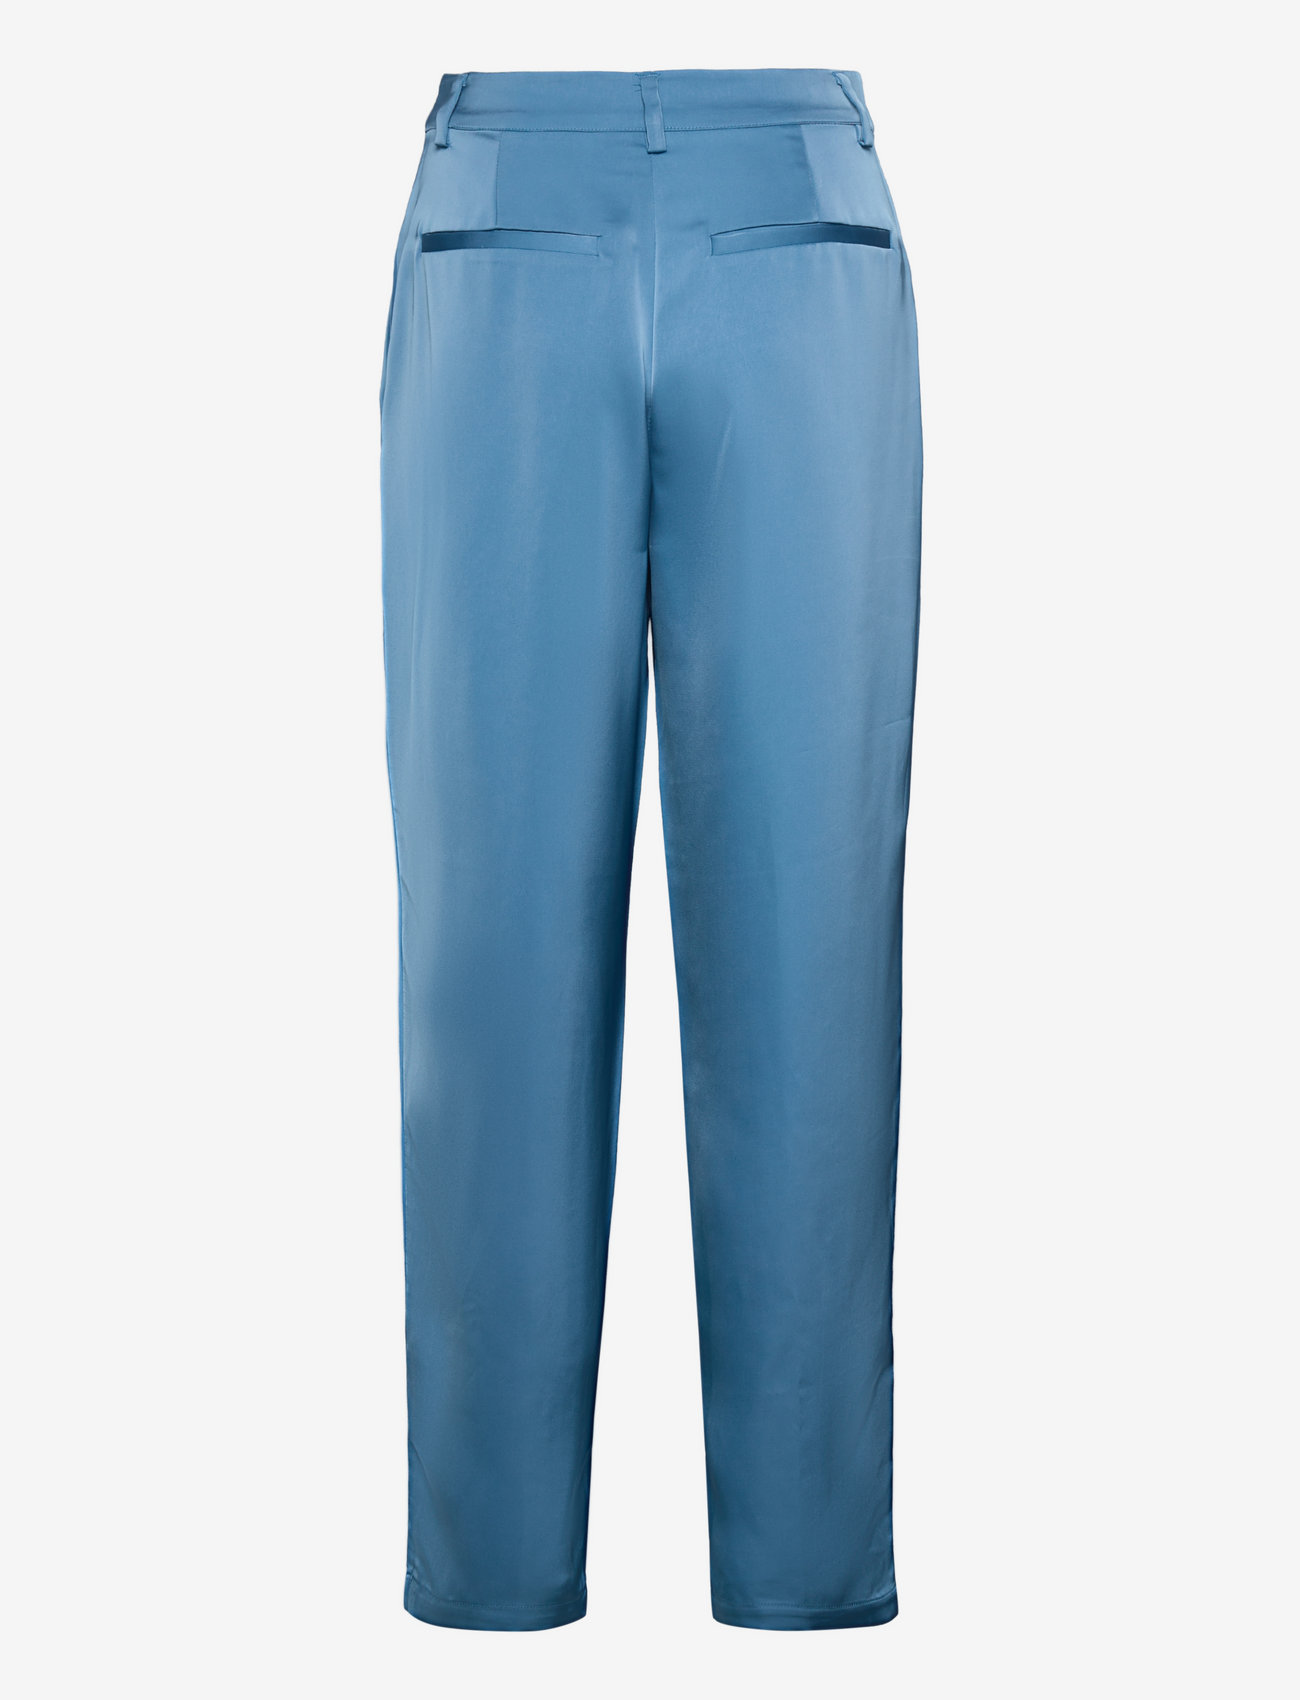 bzr - Satulla Dollar pants - puvunhousut - ocean blue - 1